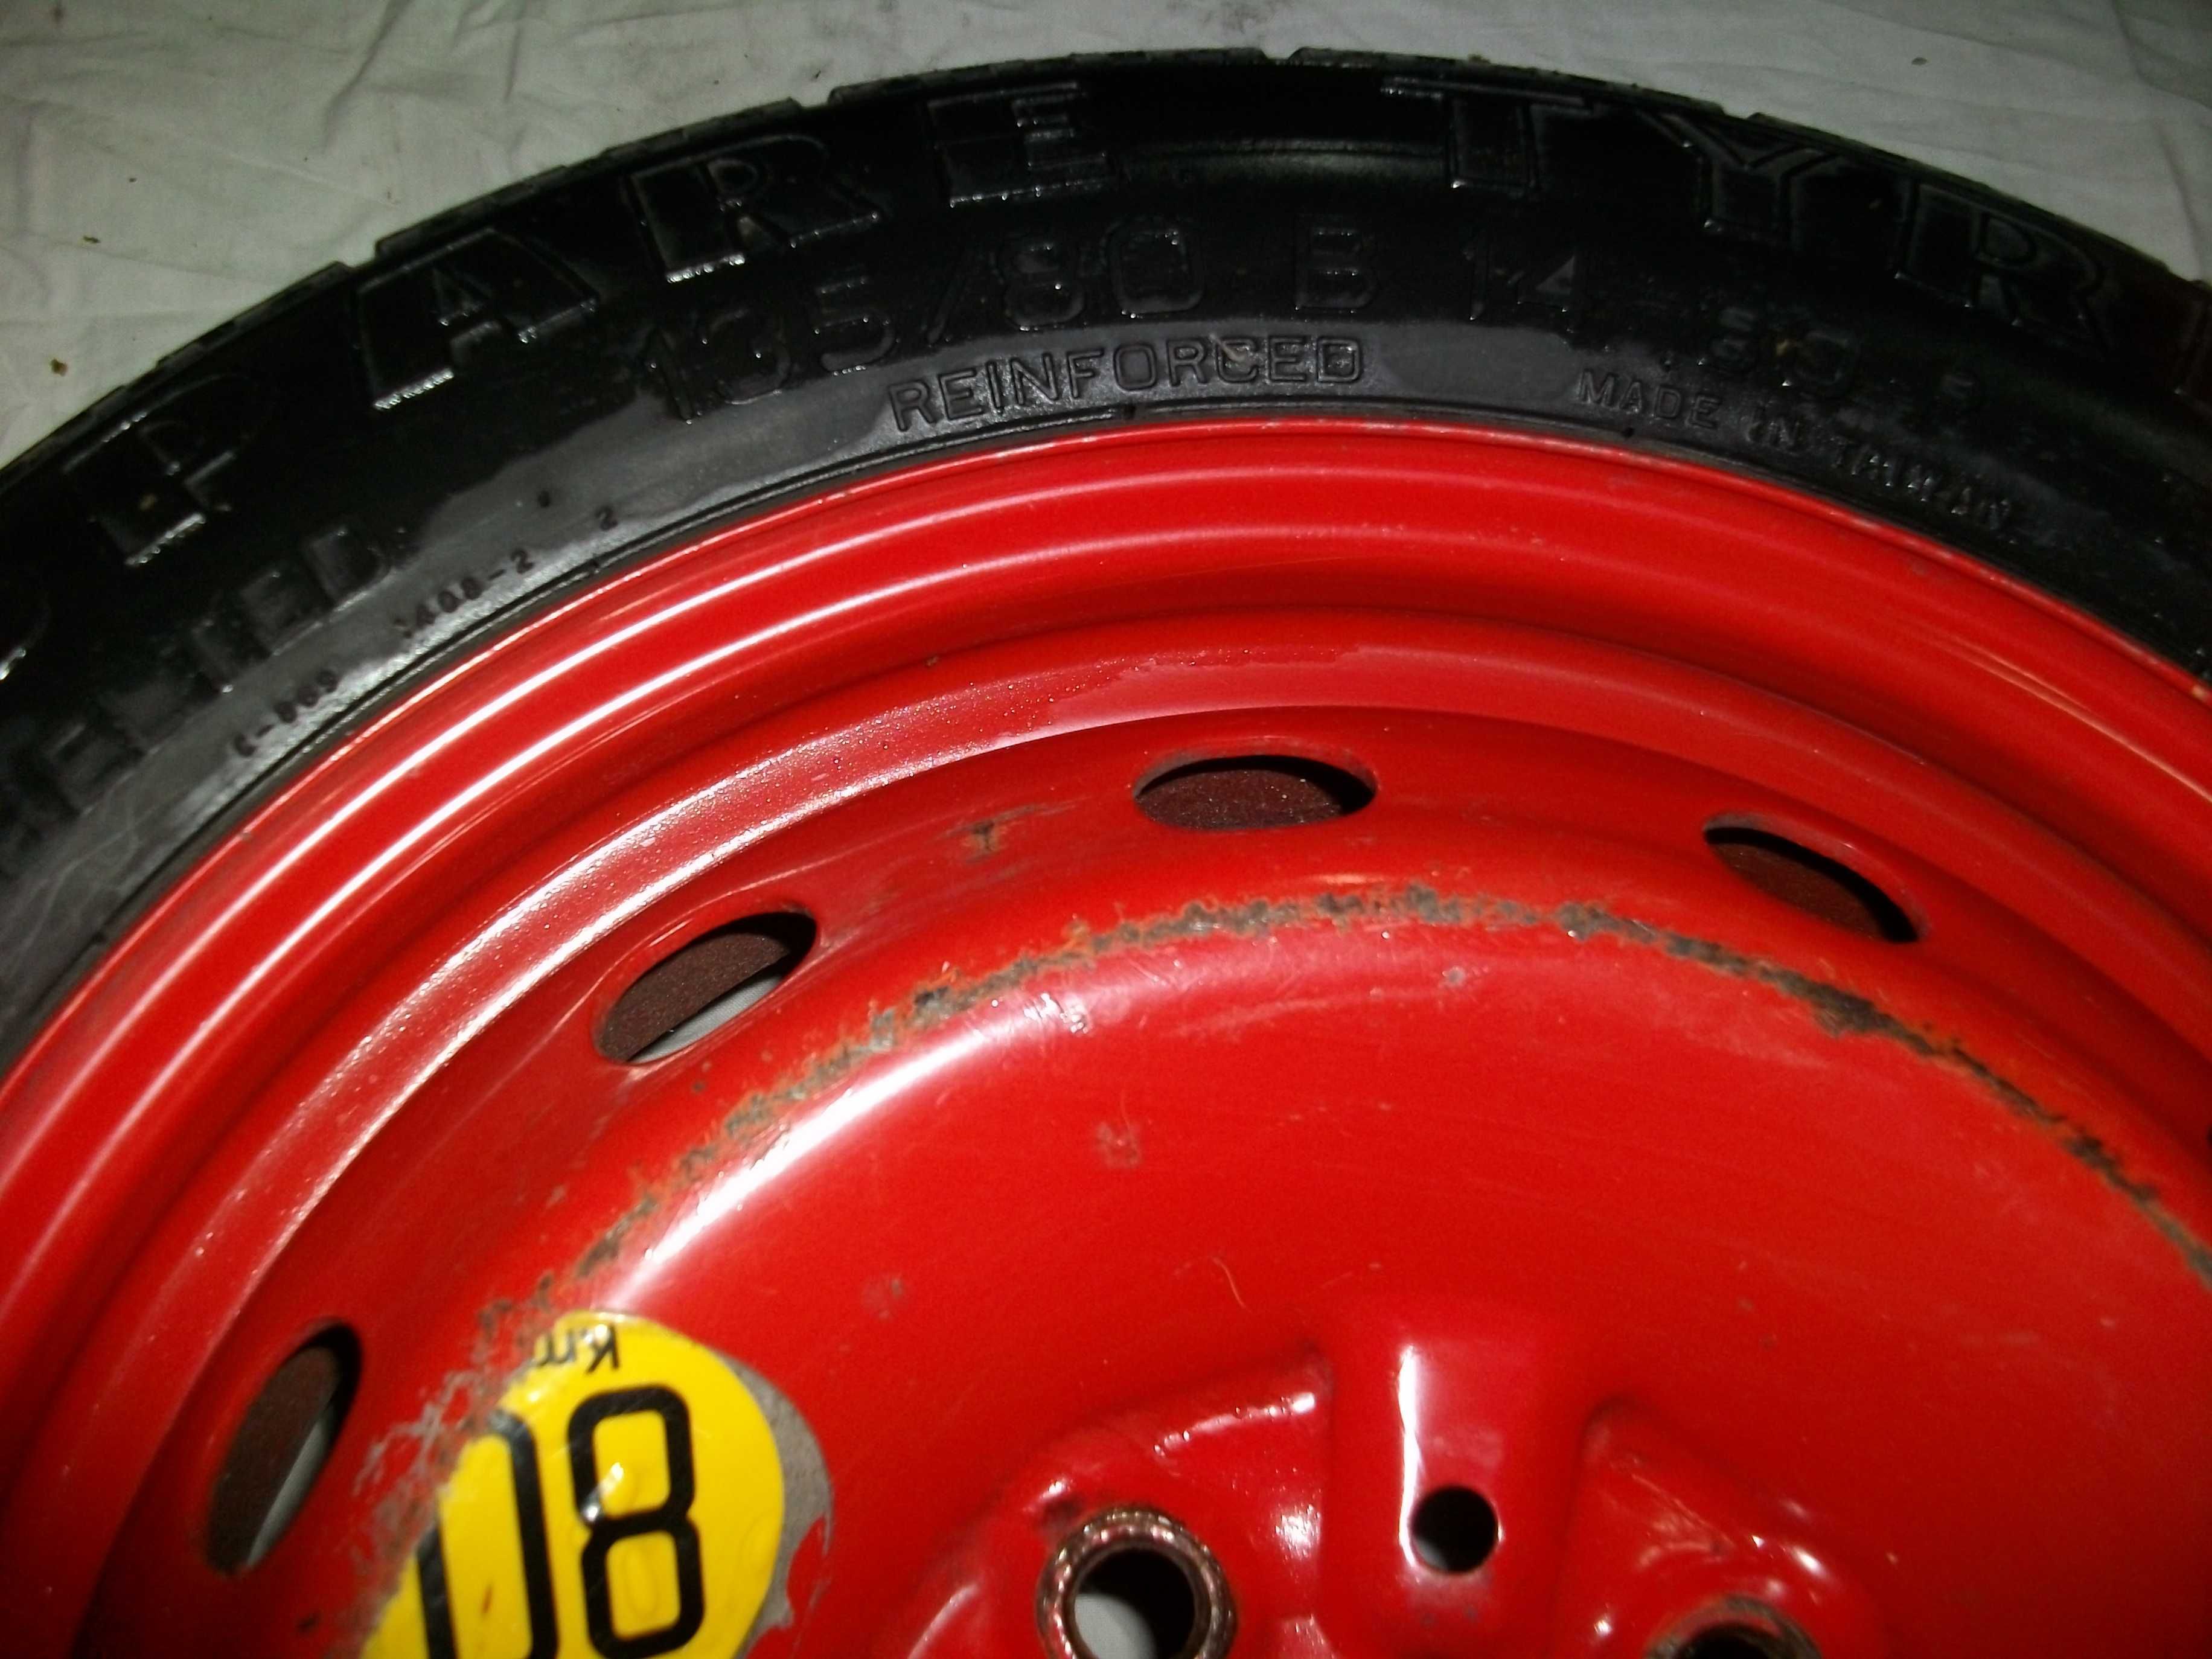 pneu sobressalente Pirelli